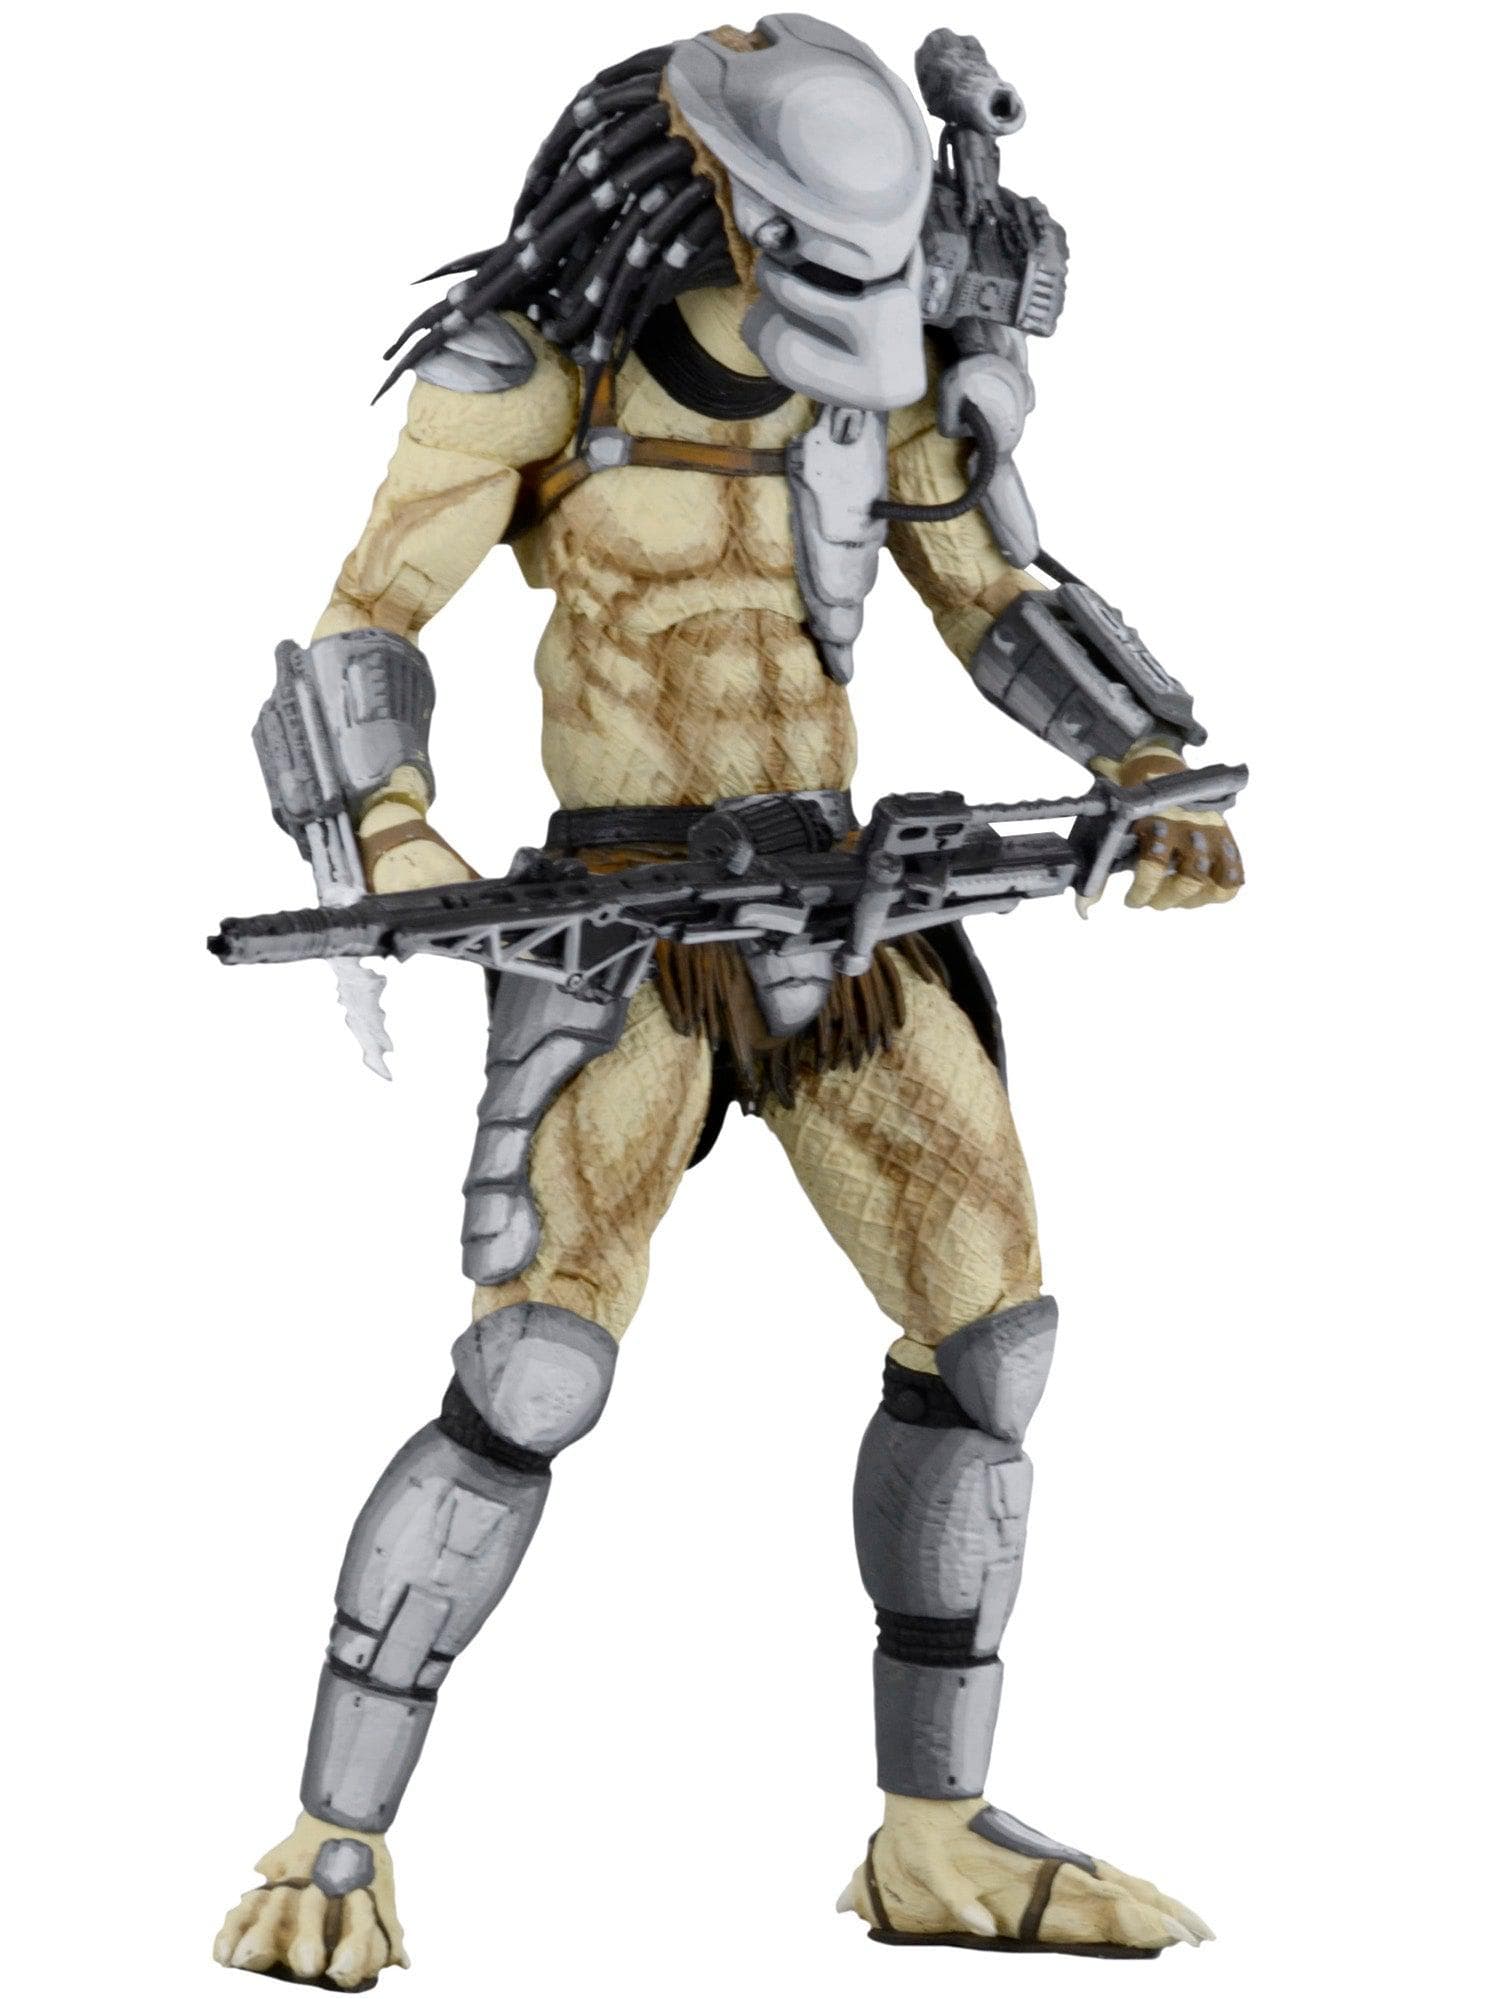 NECA - Alien vs Predator - 7" Scale Action Figure - Arcade Warrior Predator - costumes.com